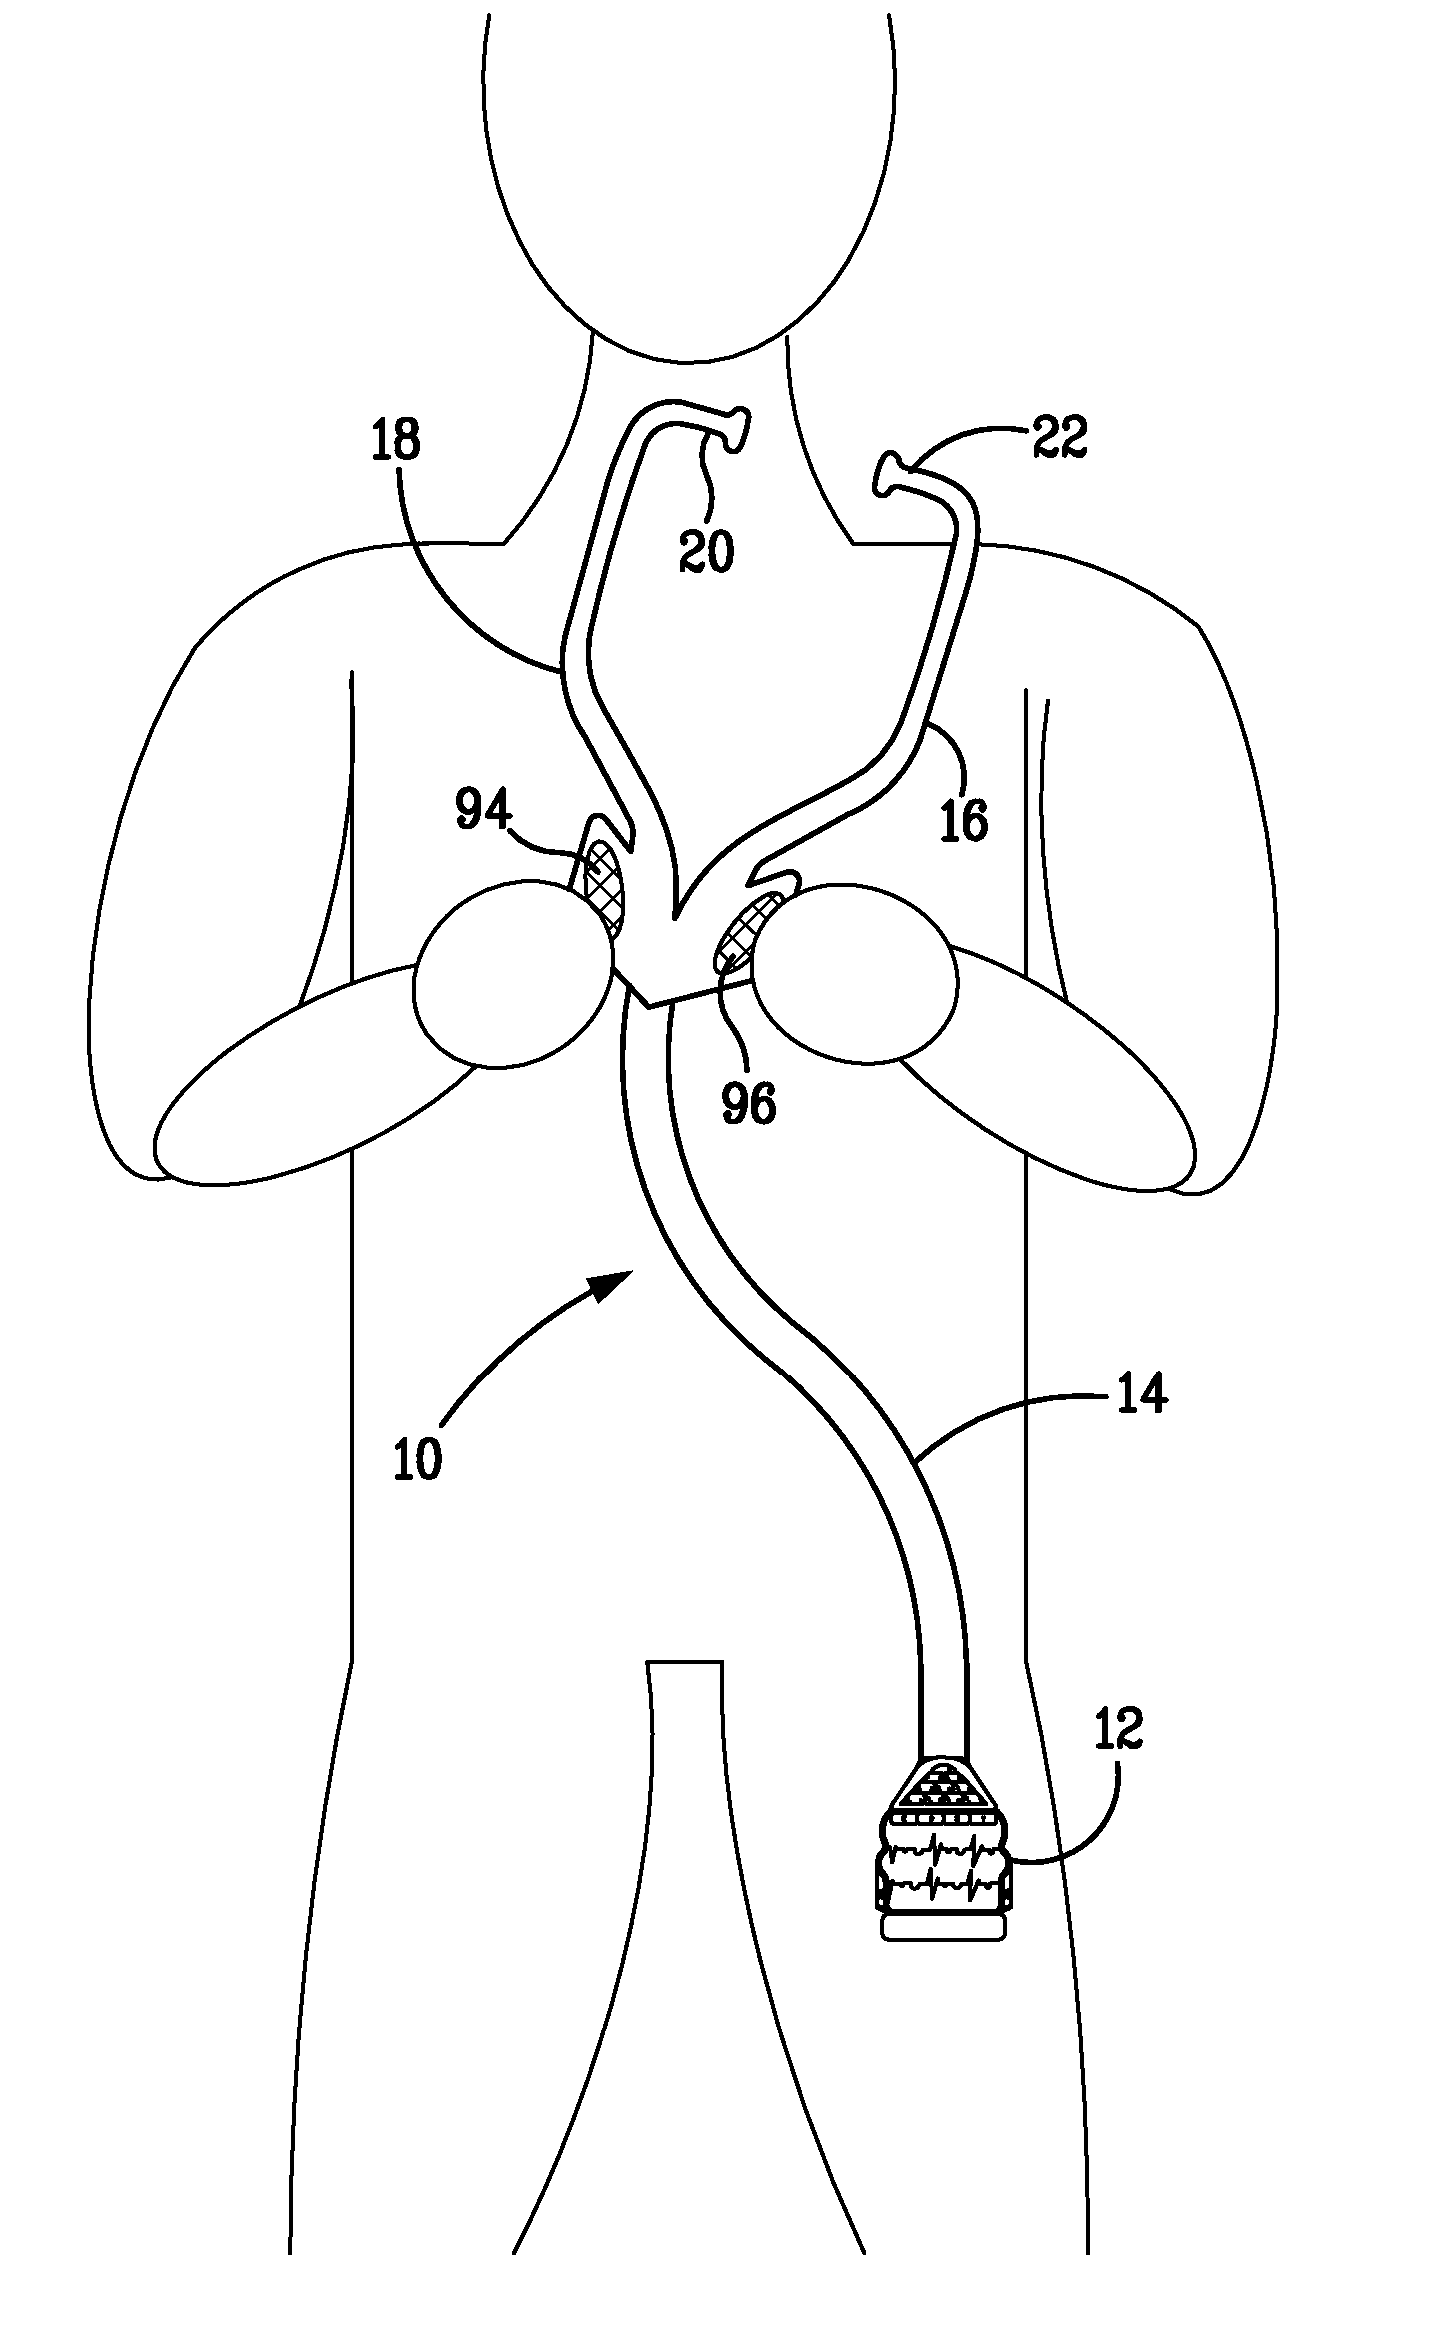 Medical examination apparatus